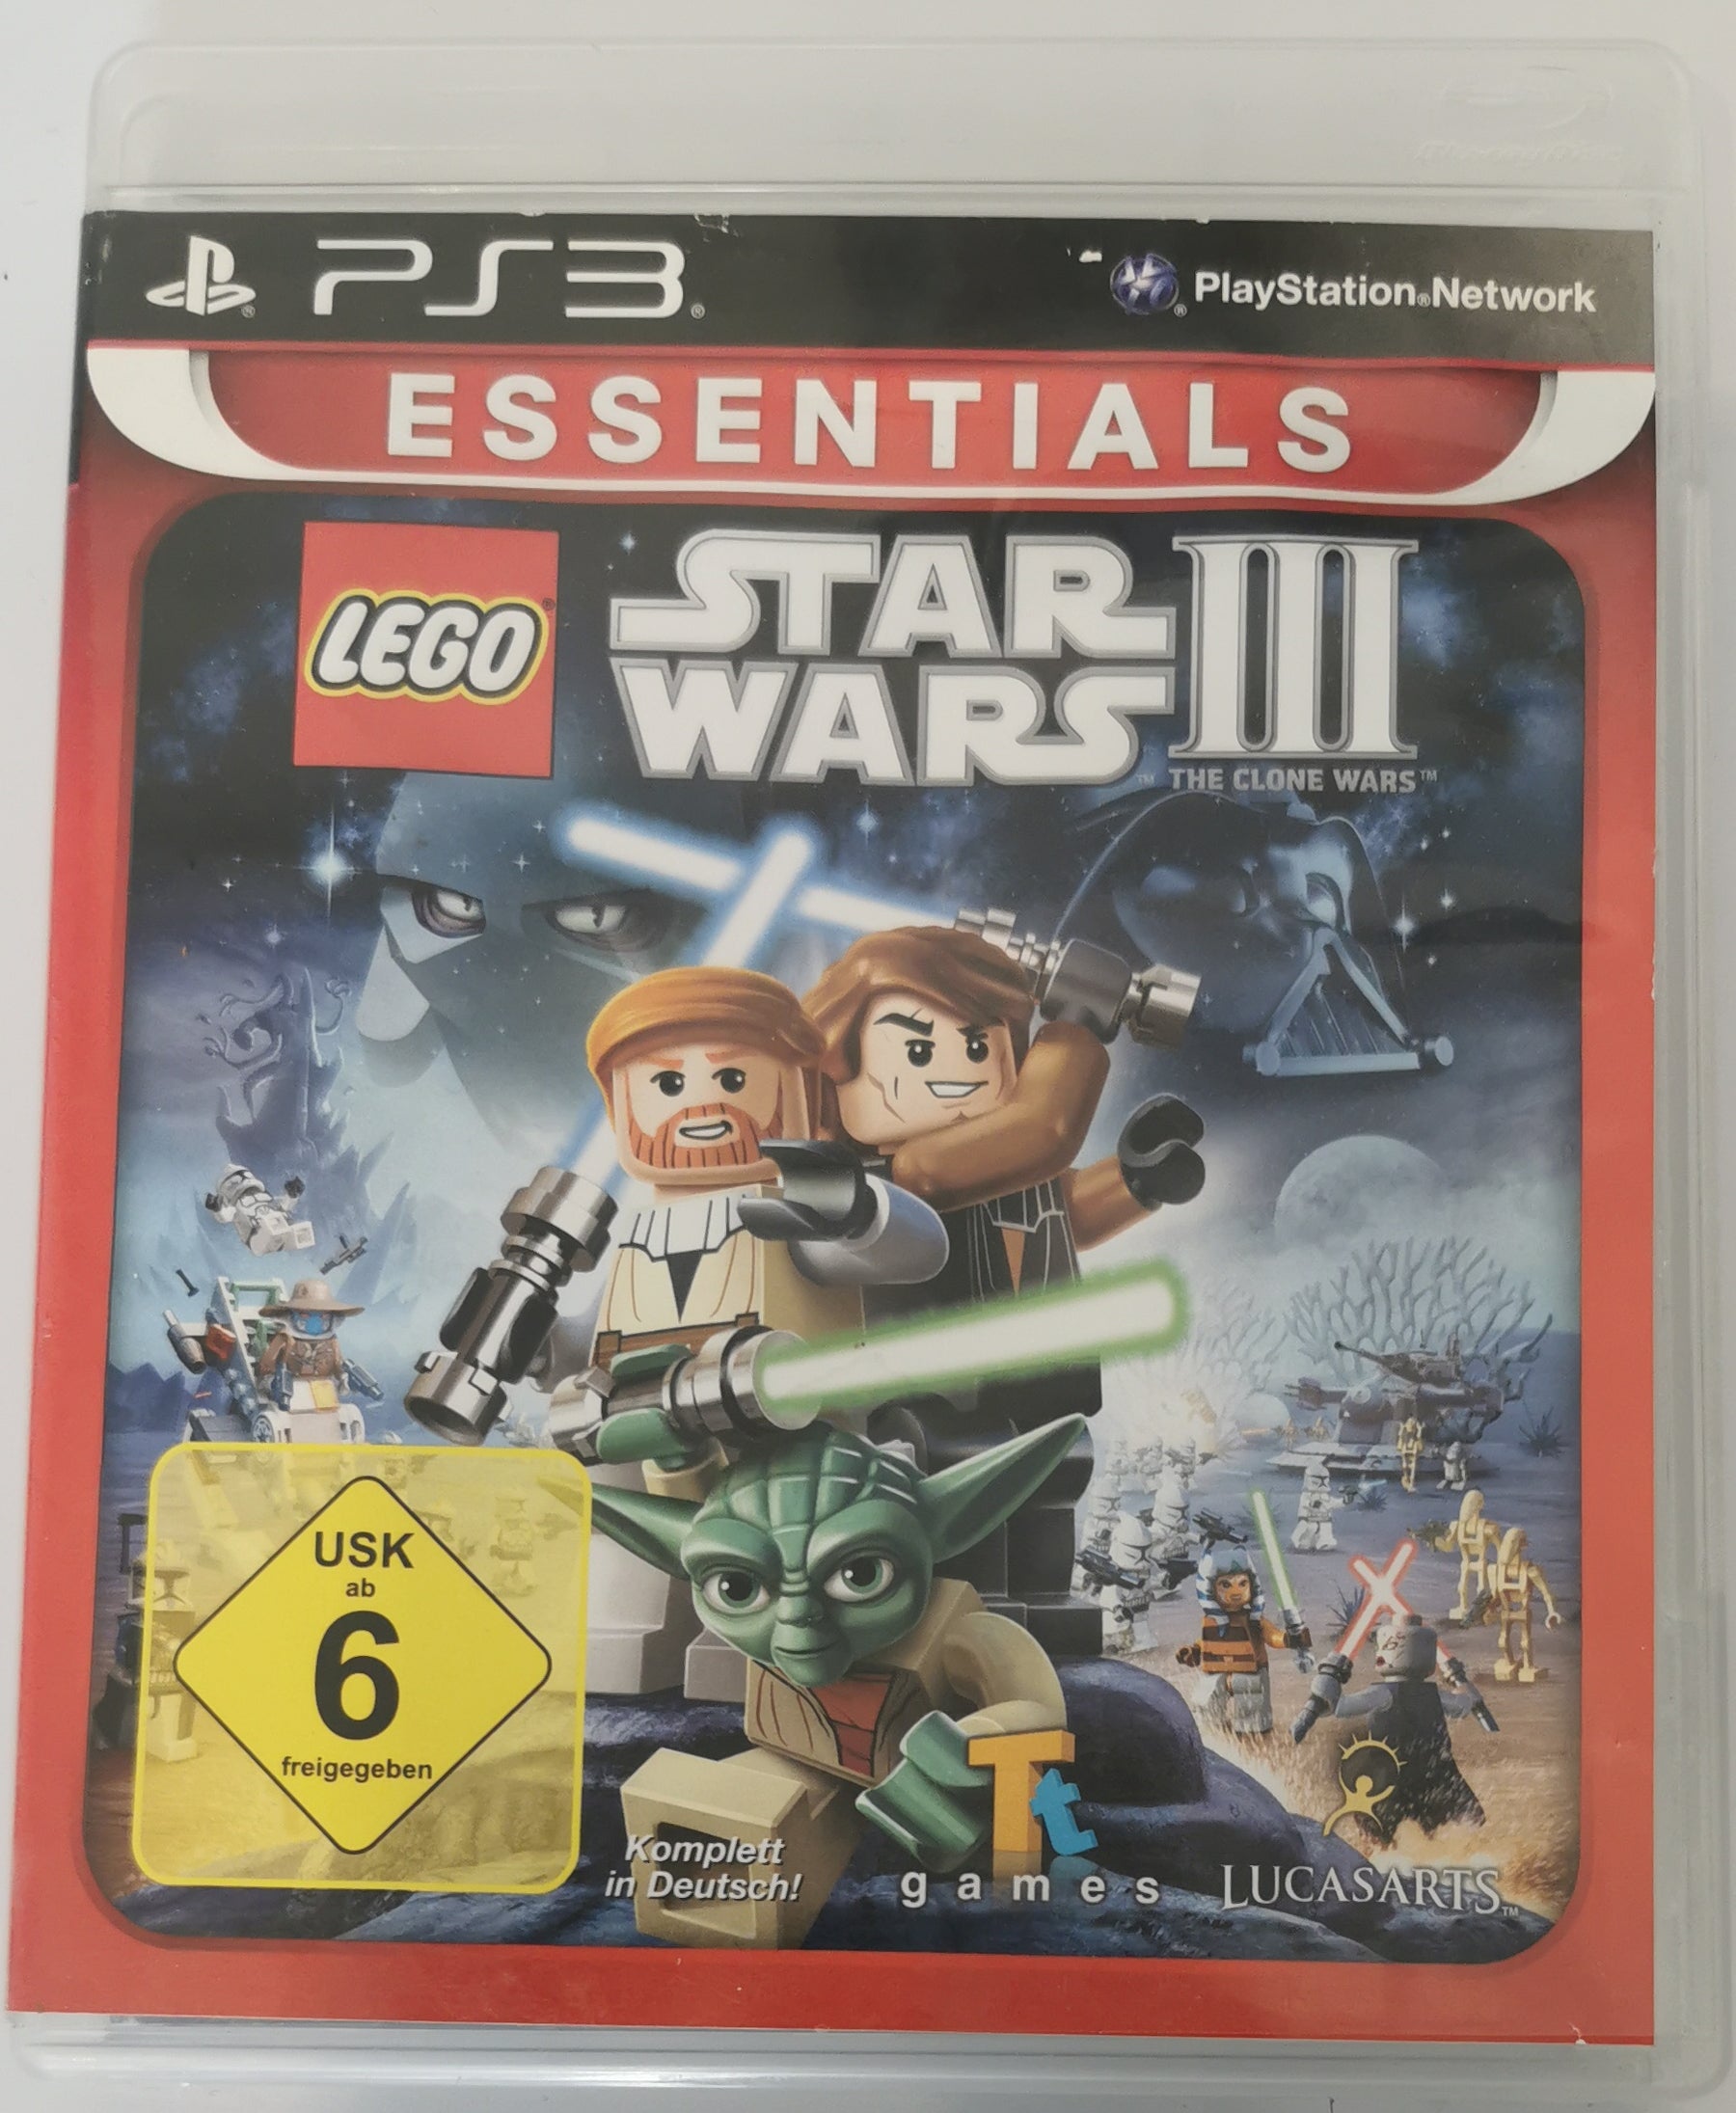 LEGO Star Wars IIl The Clone Wars PlayStation 3 [Sehr Gut]